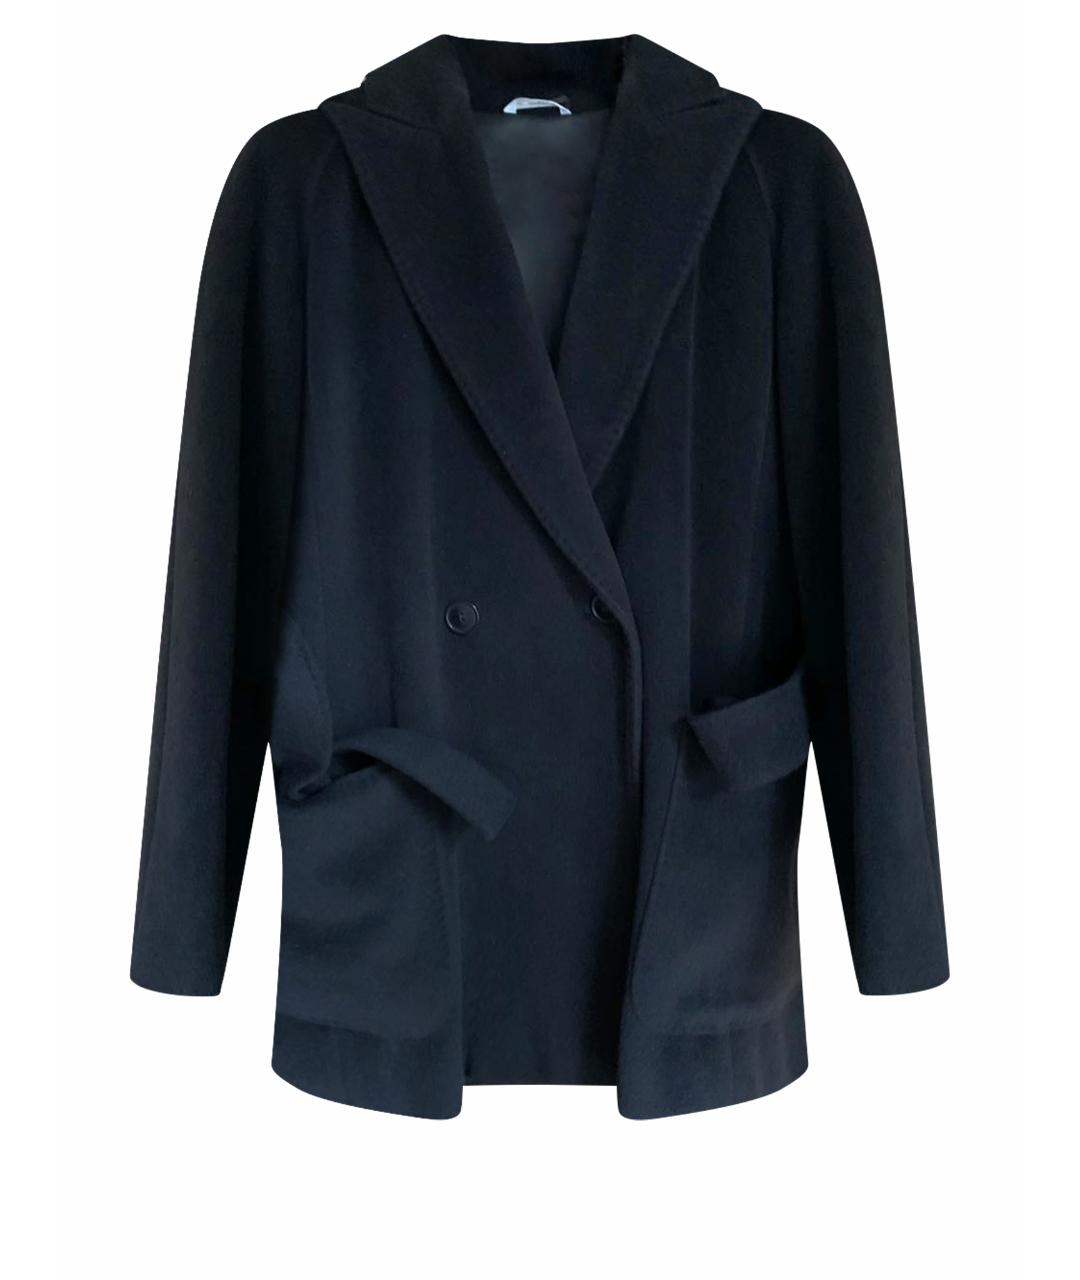 MAX MARA Черное шерстяное пальто, фото 1